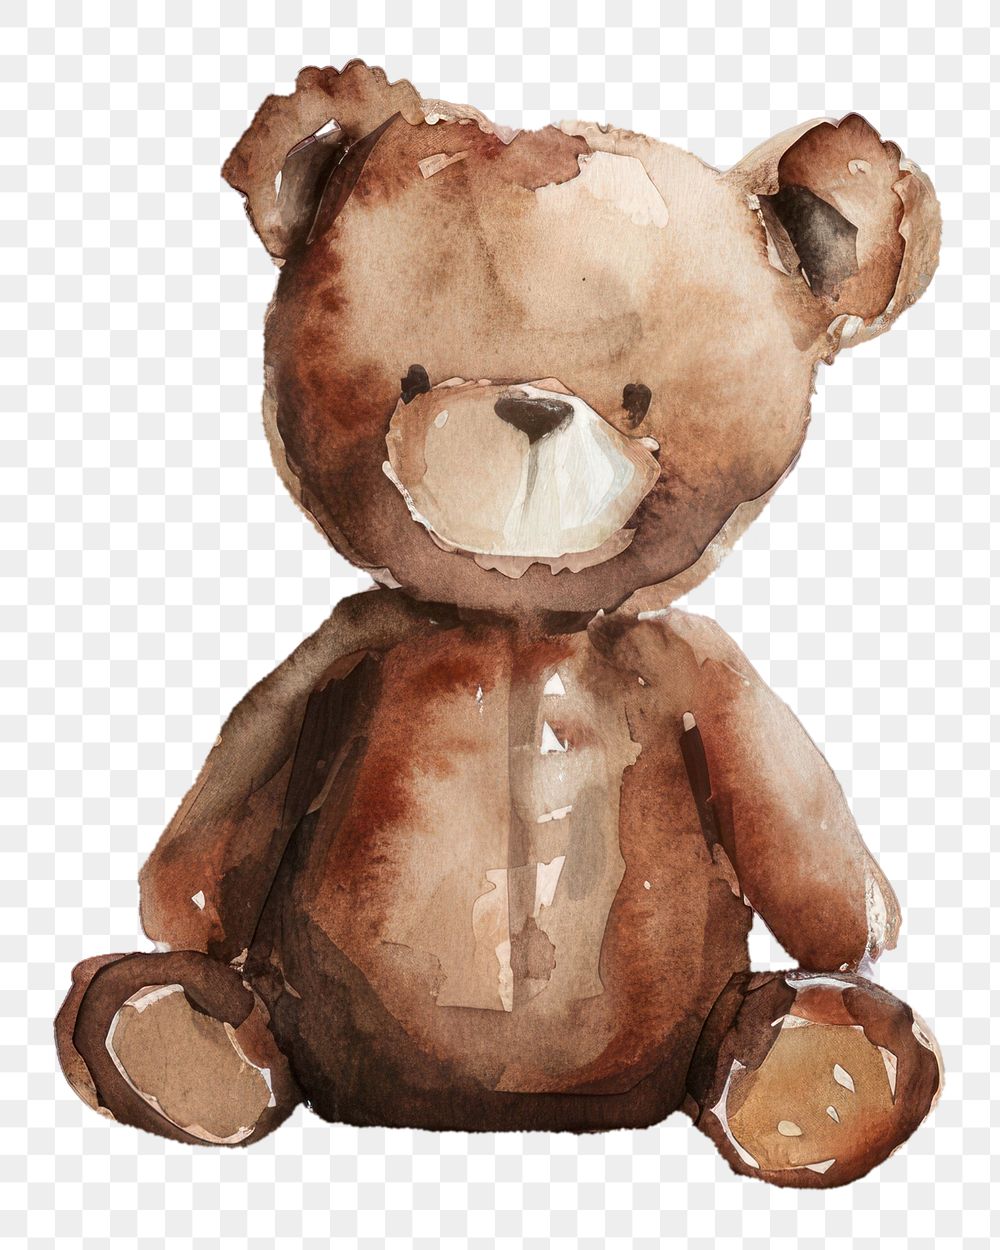 PNG Dark brown teddy bear toy representation creativity.